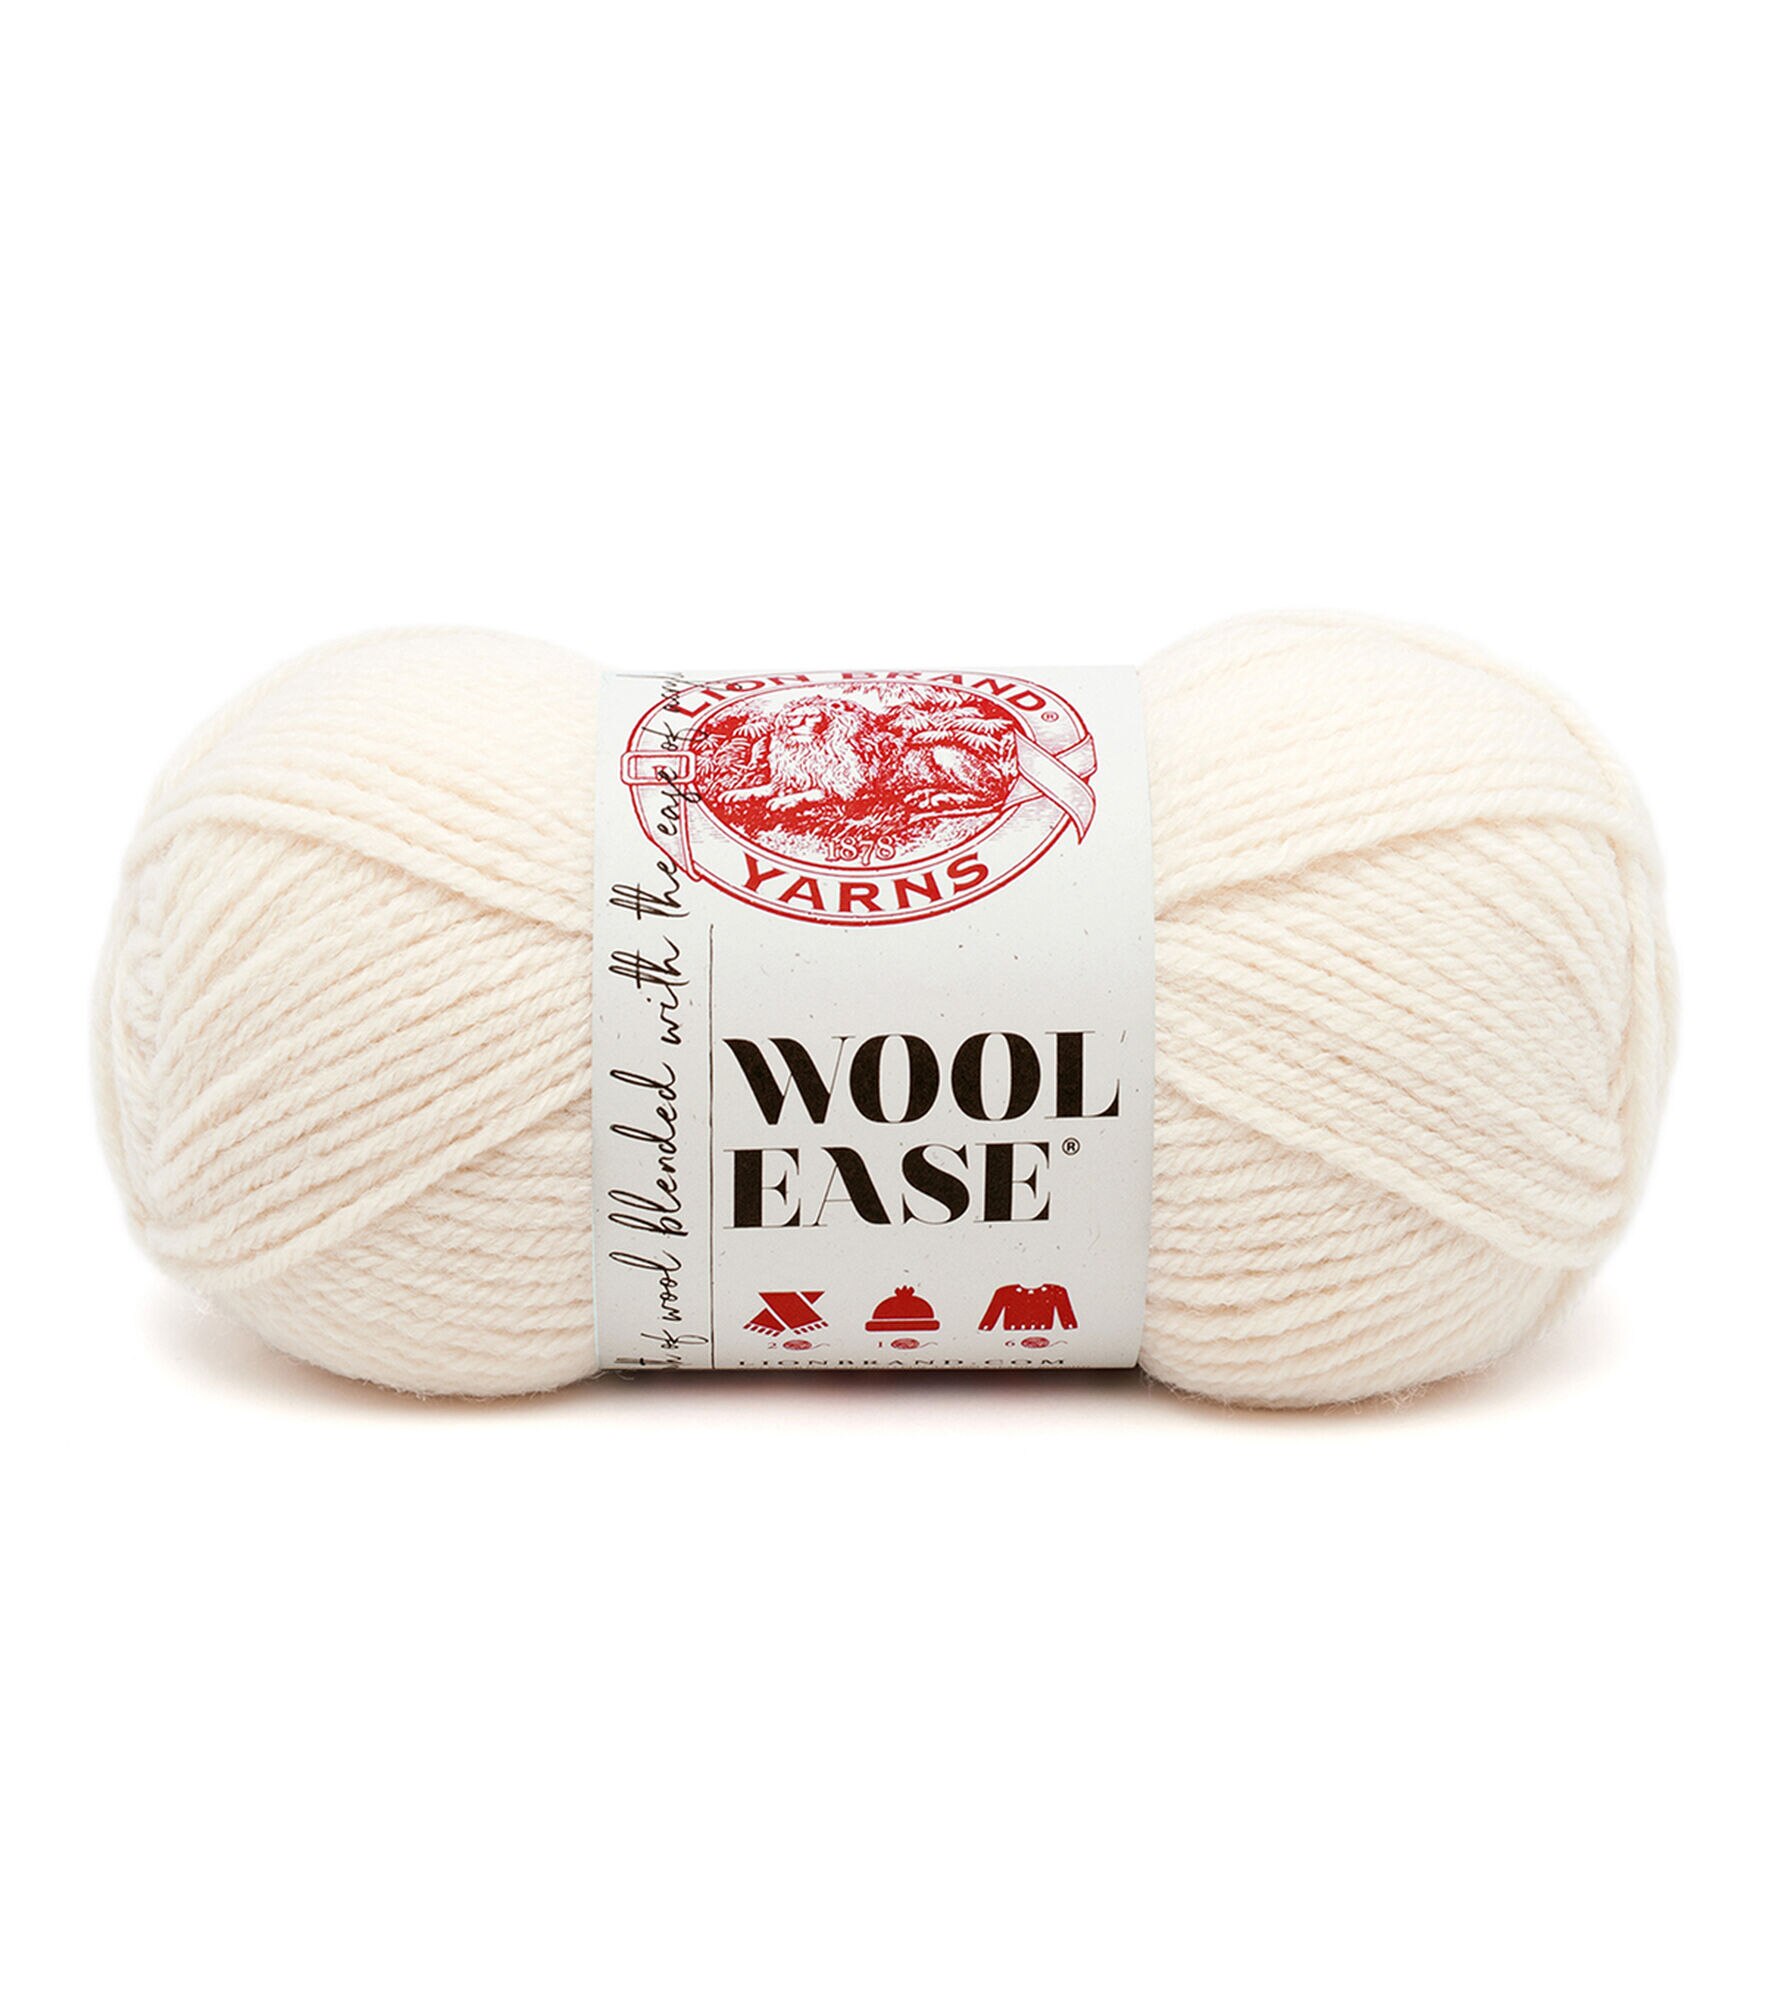 Lion Brand Fisherman's Wool Yarn: Oatmeal